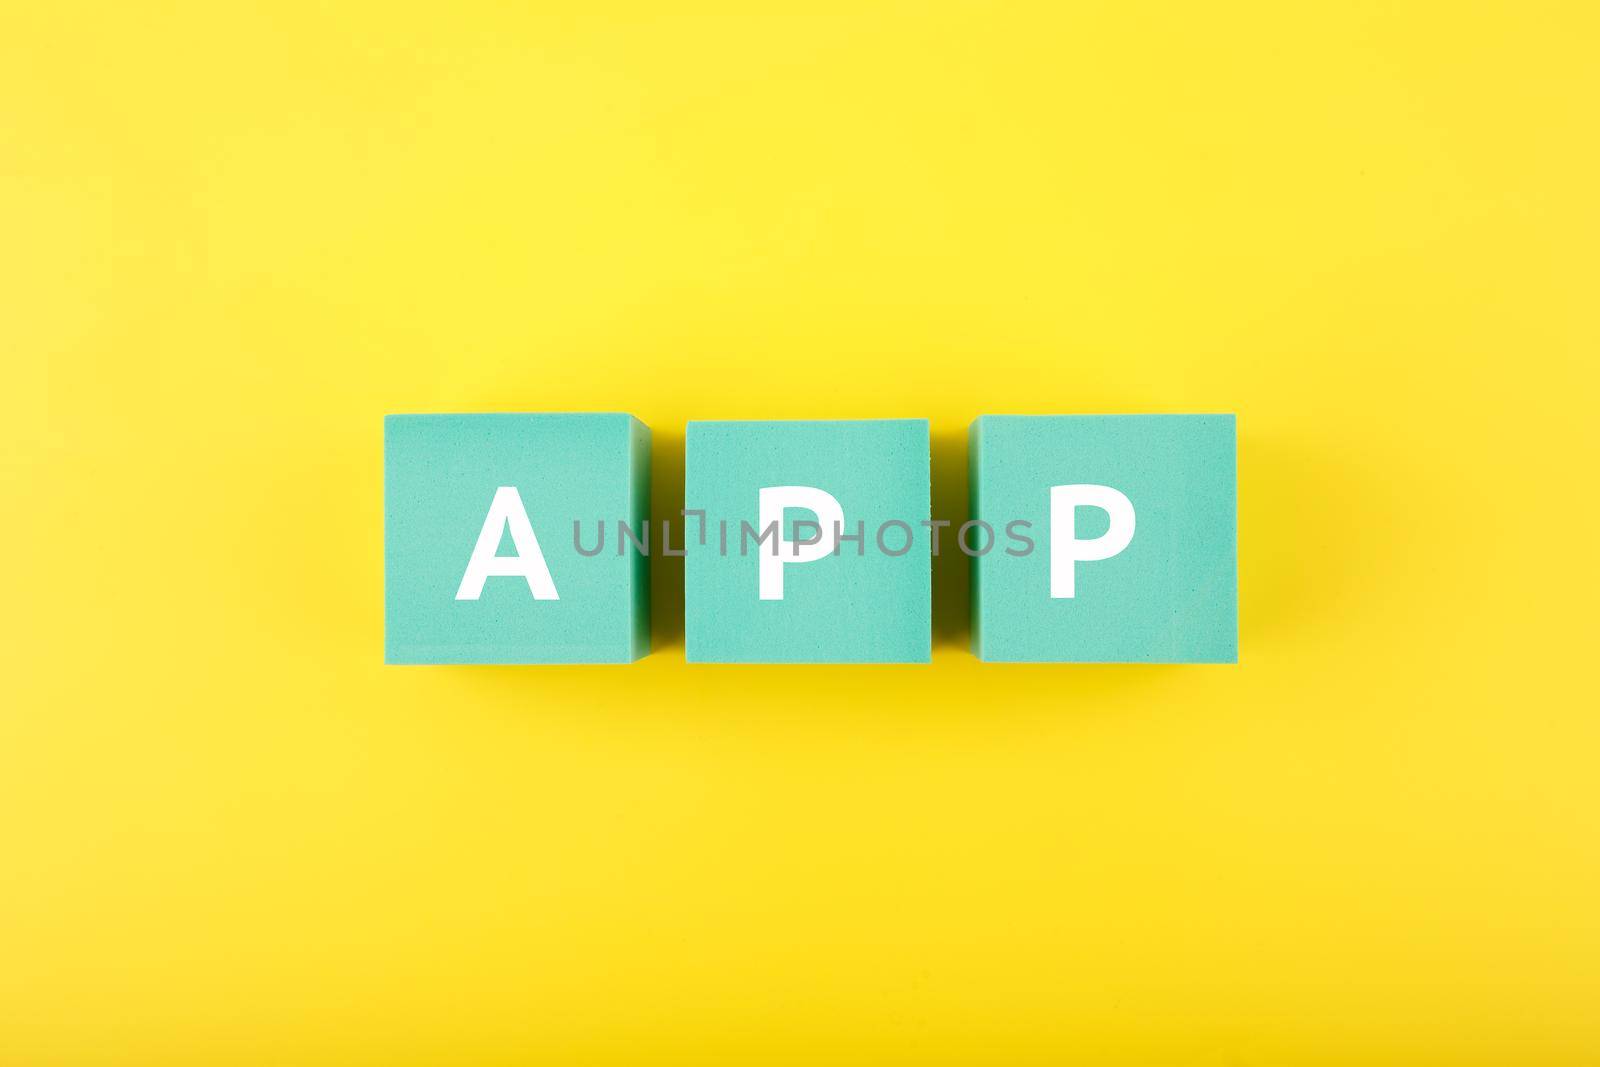 App written on blue cubes against bright yellow background by Senorina_Irina